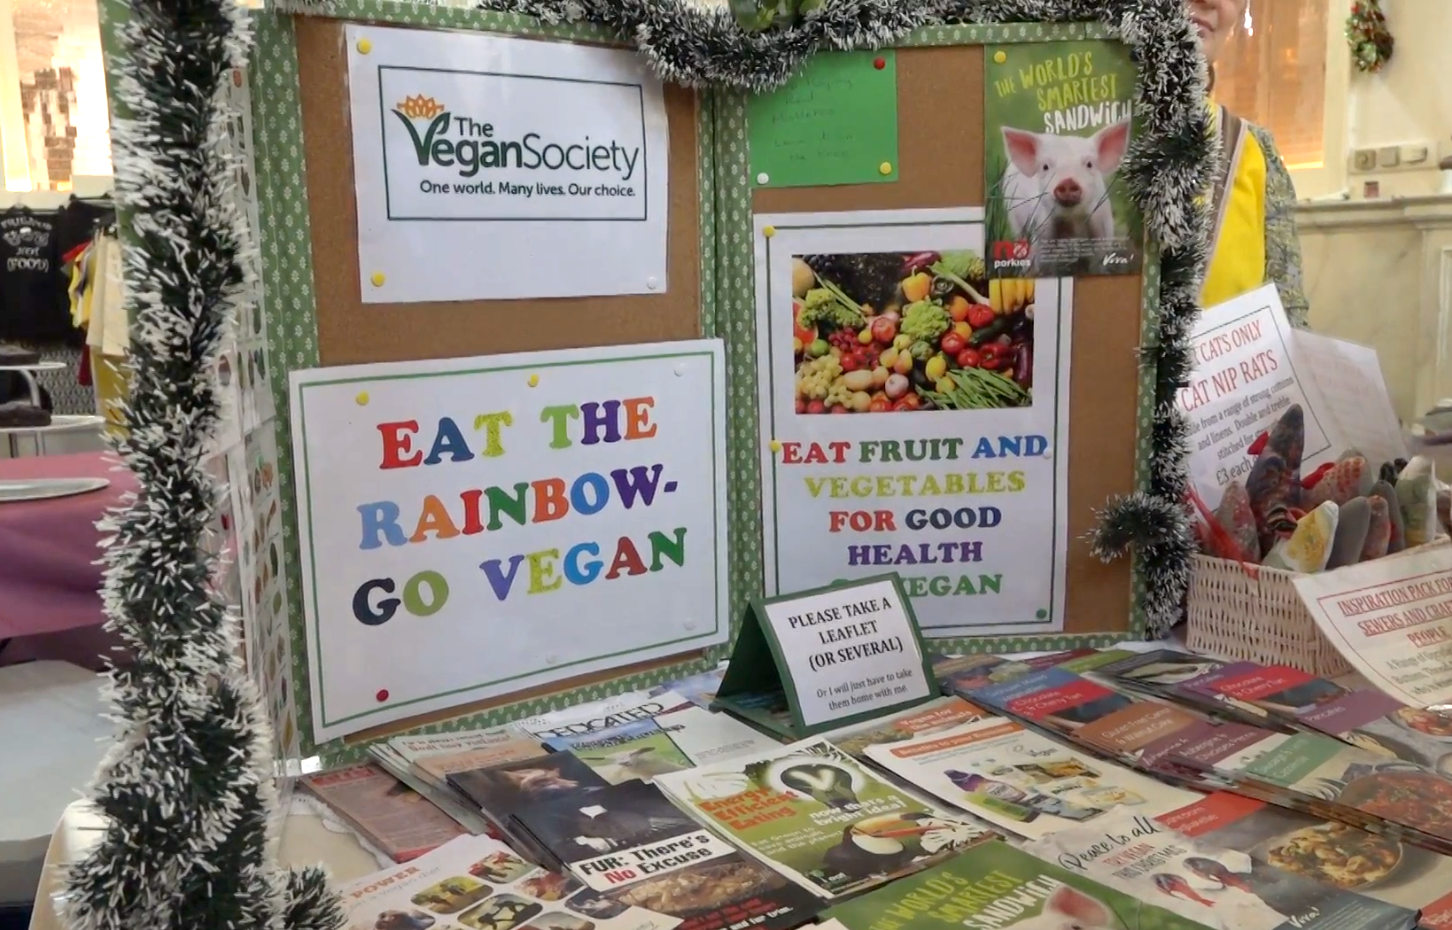 Vegan Festival leaflet stand. Photograph by: Dilbag Kaur Dhaliwal